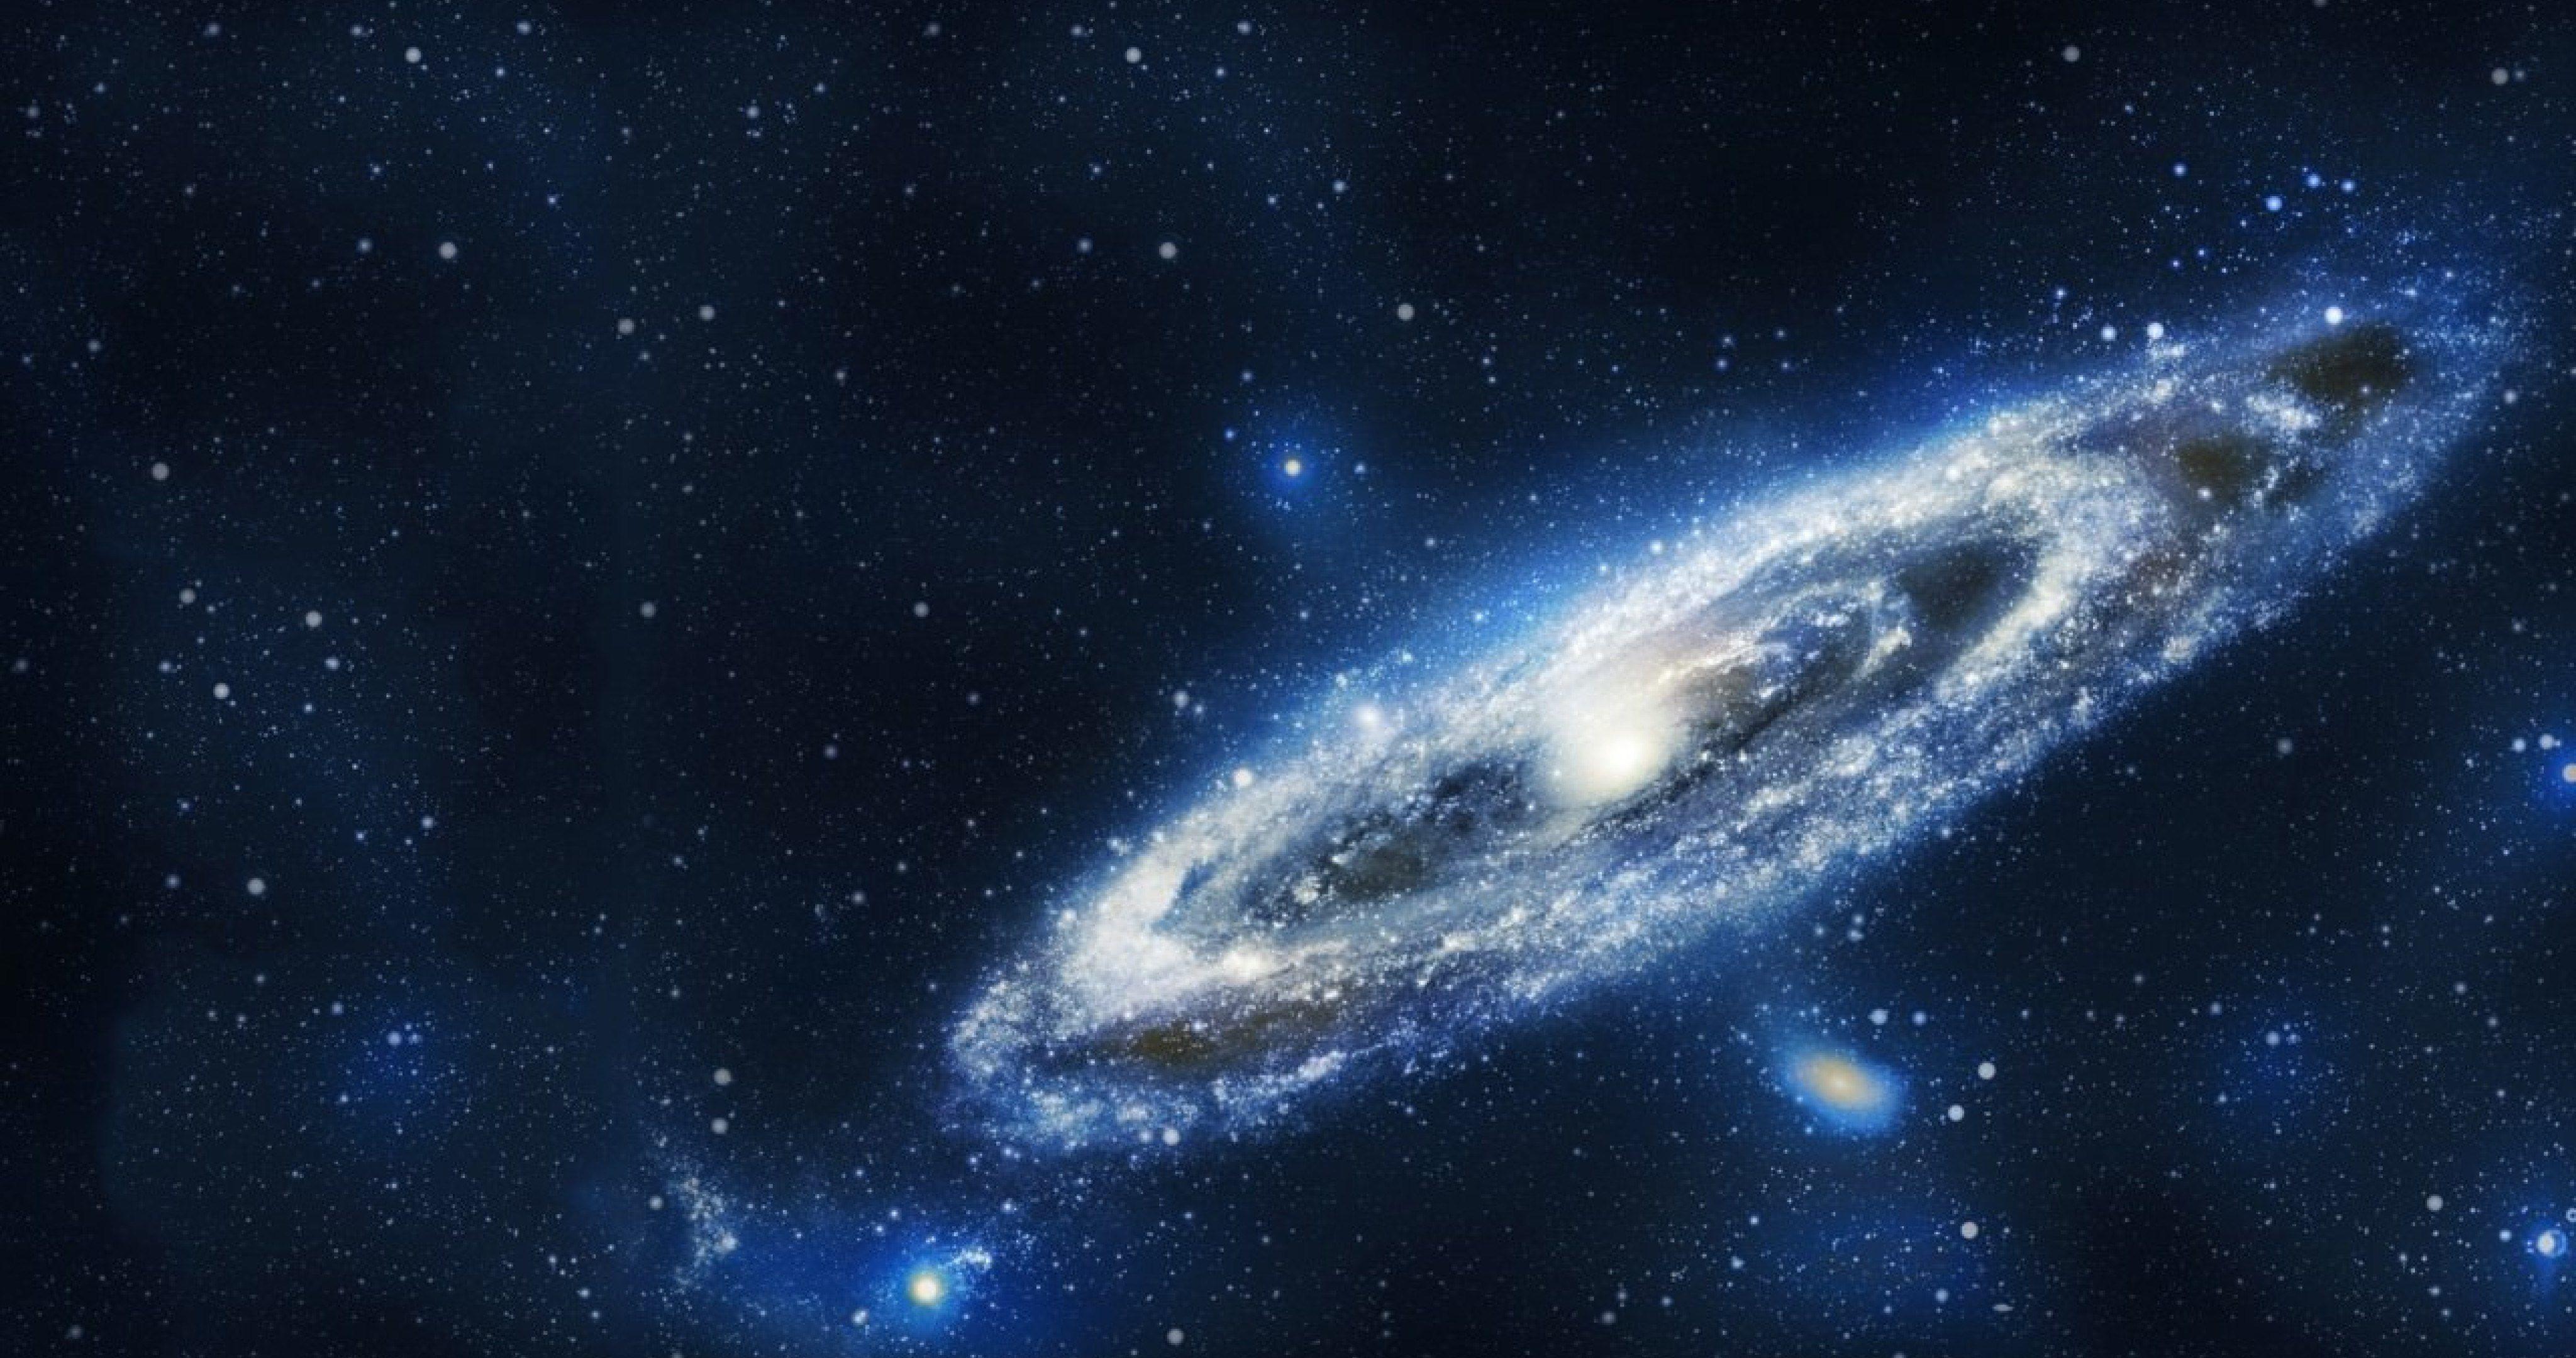 universe galaxy 4k ultra HD wallpaper .com